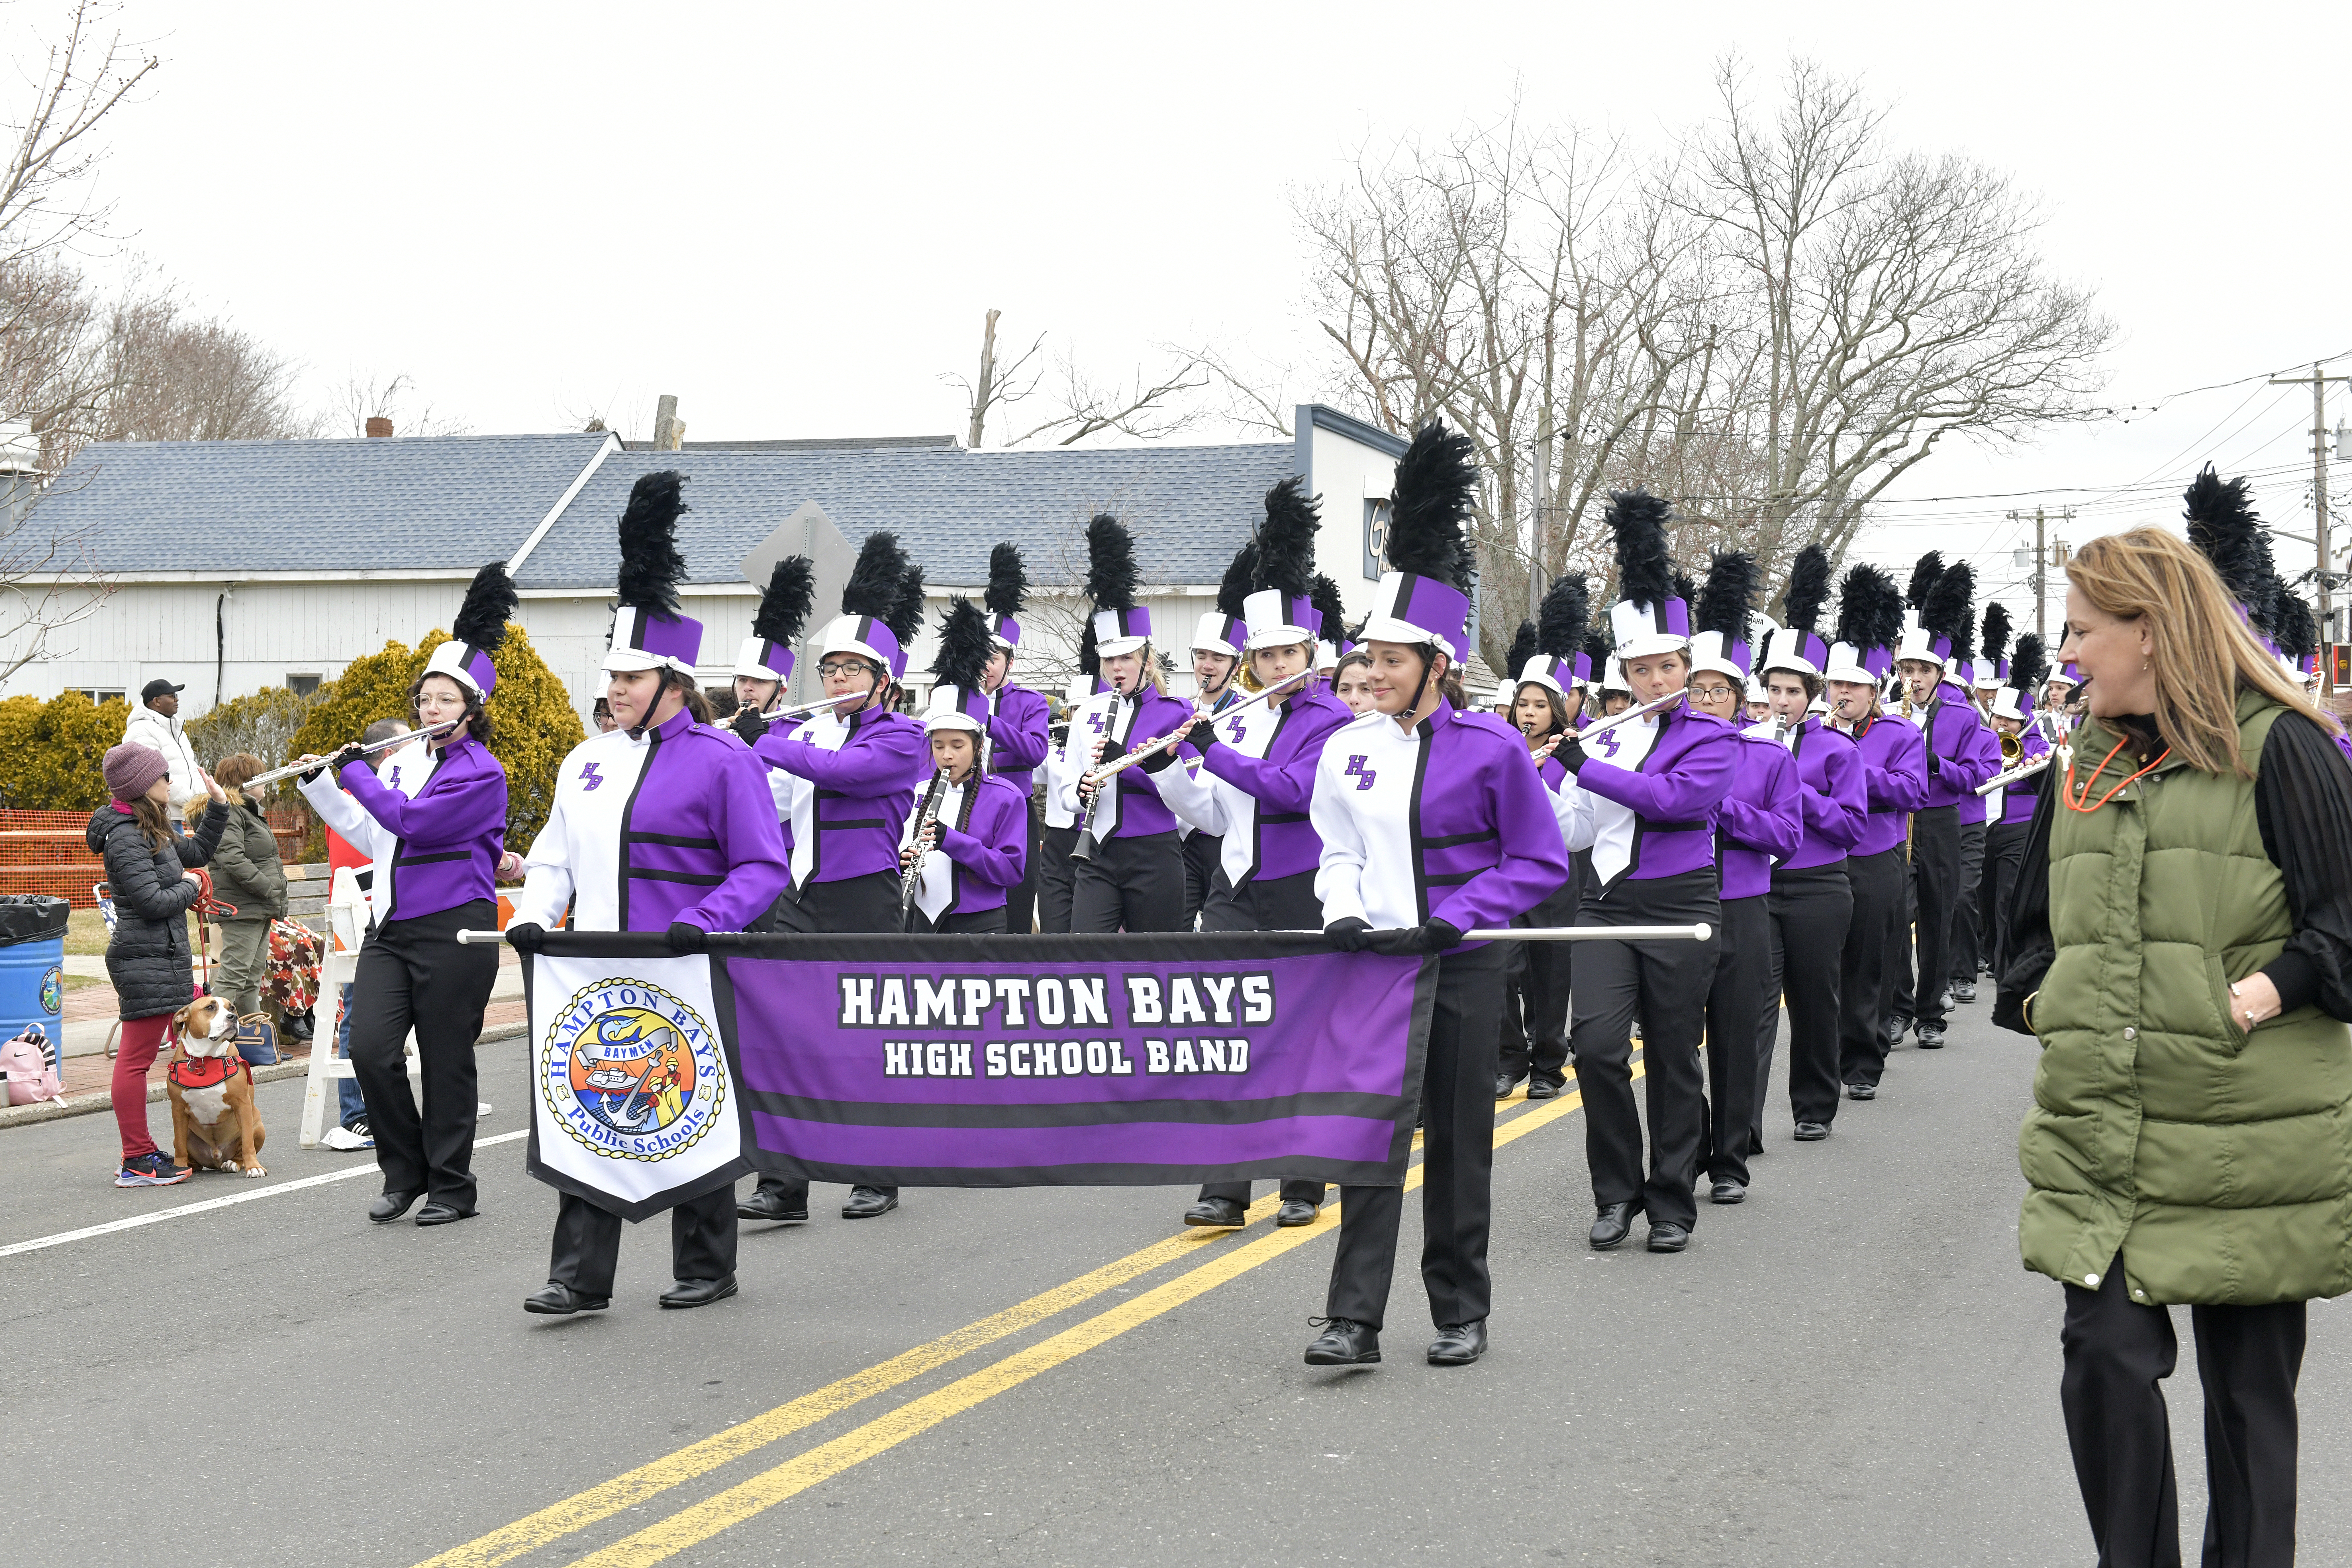 The Hampton Bays High School band.